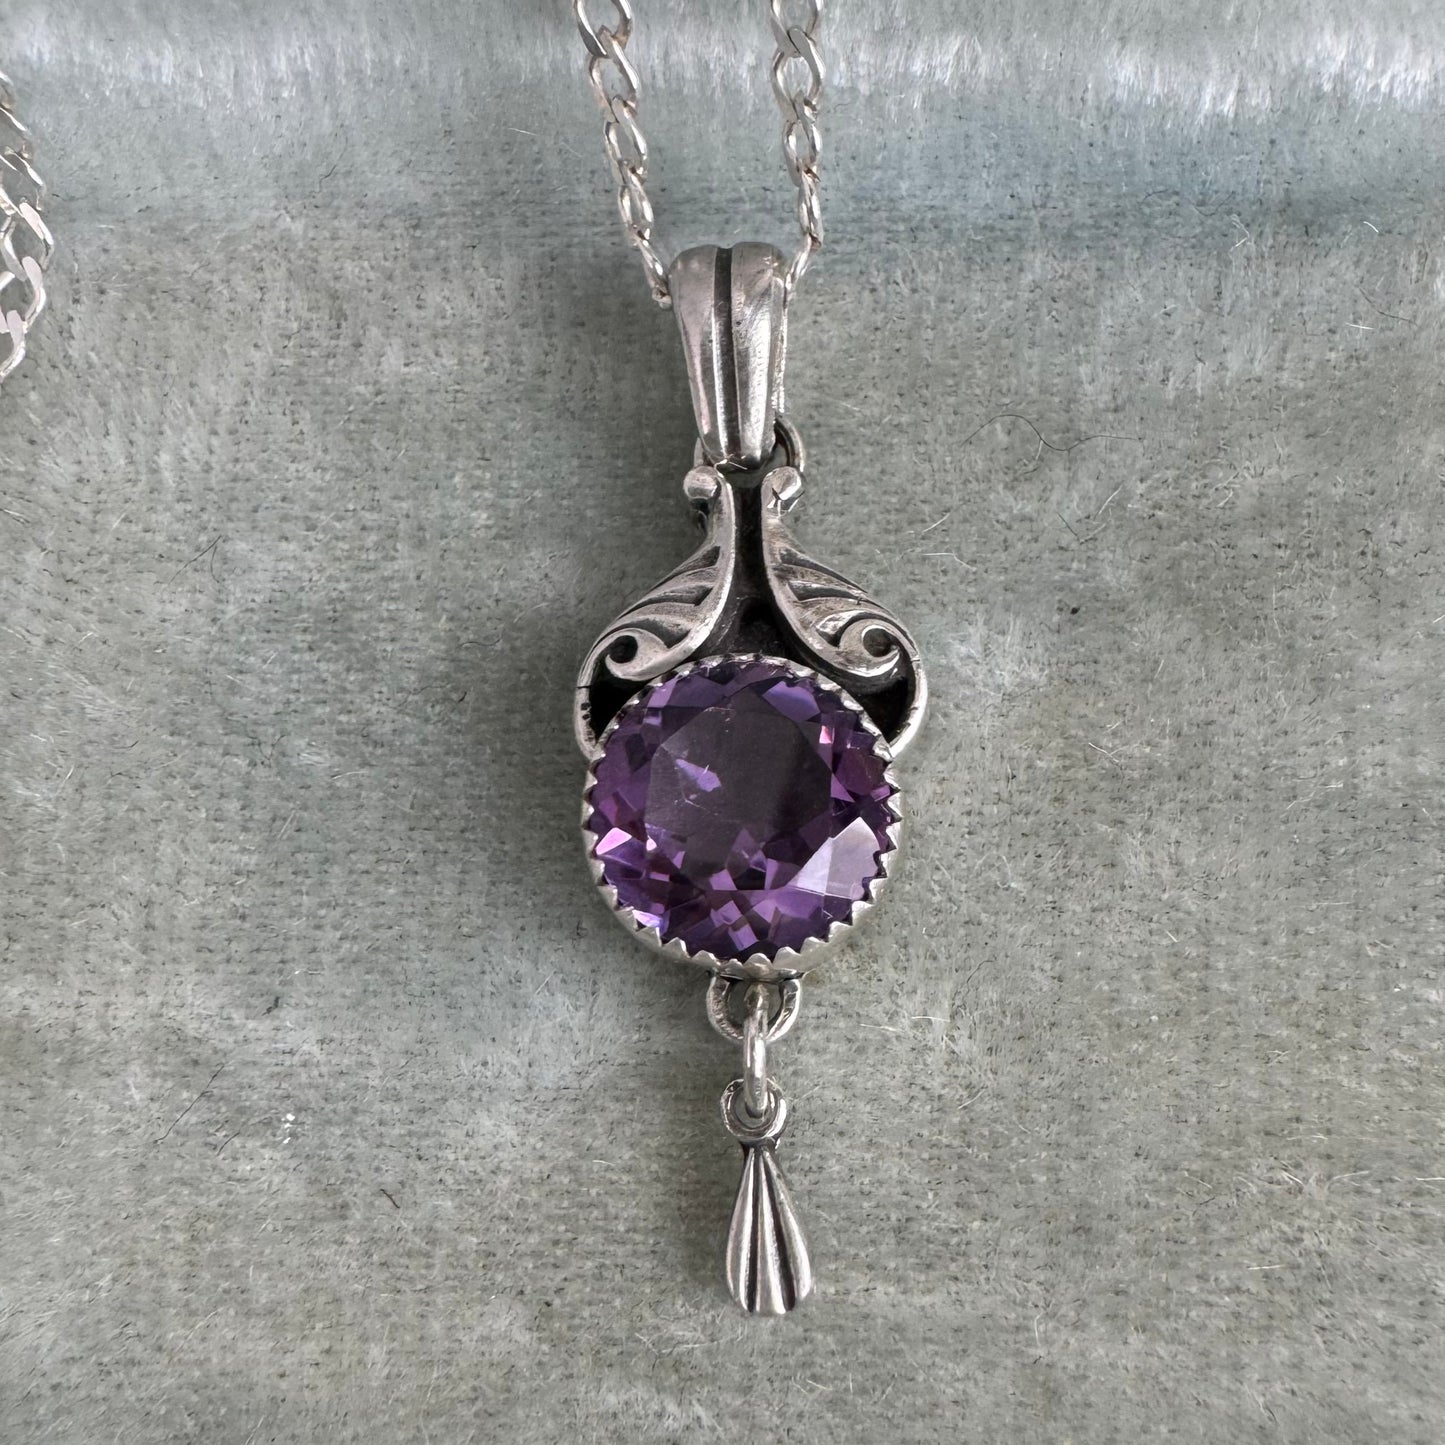 Art Deco 3.8 carat lavender Amethyst pedant drop necklace handmade in Sterling Silver